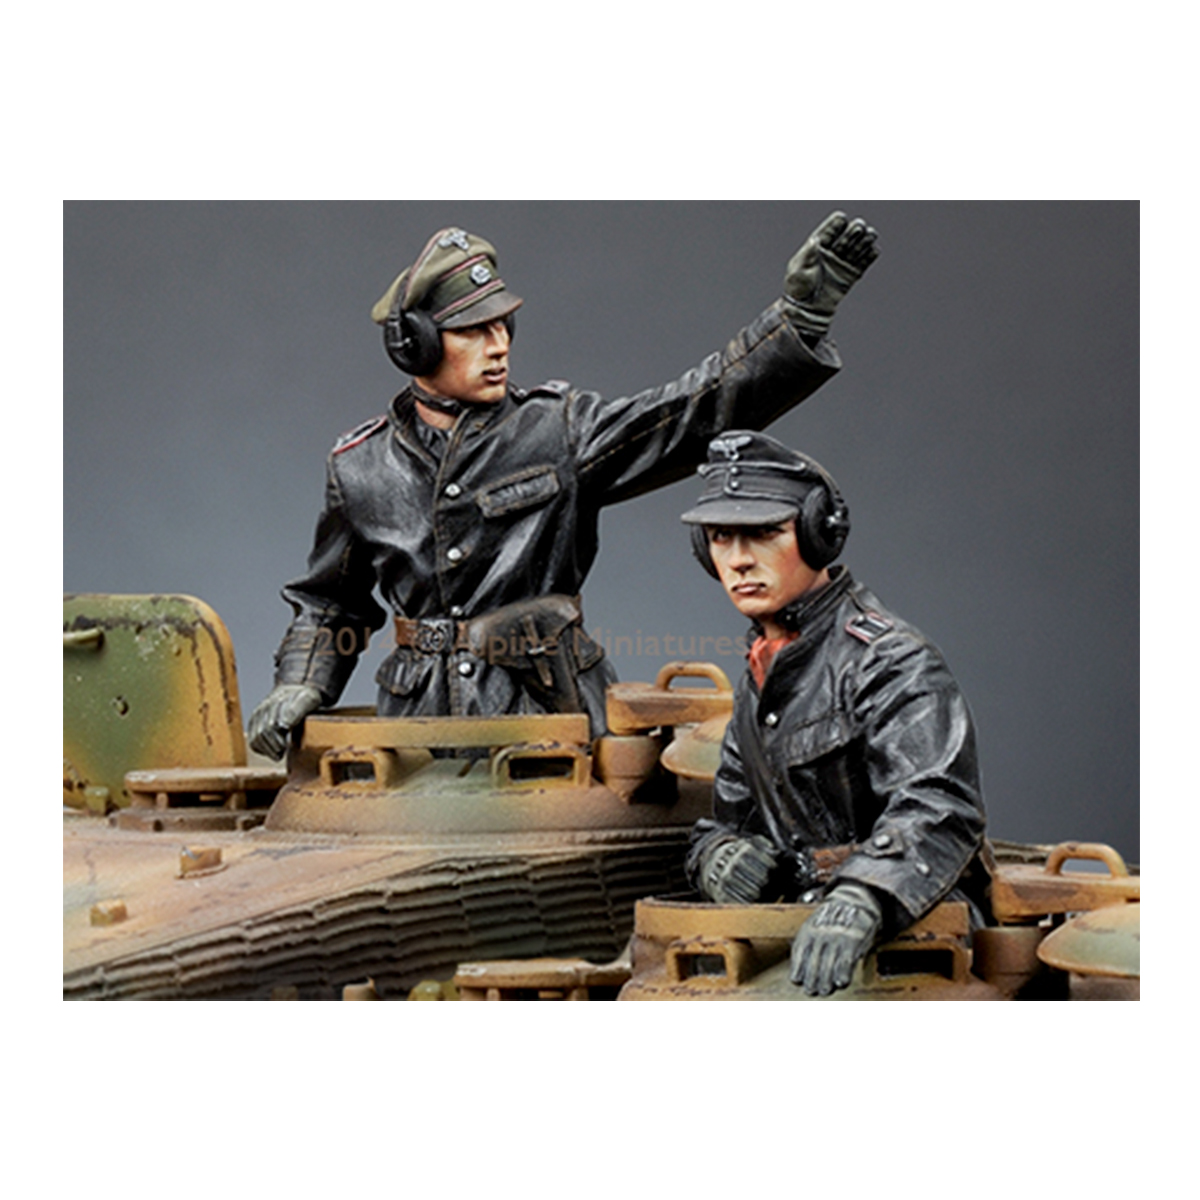 Alpine Miniatures – SS Panzer Commander Set (2 figs) 1/35